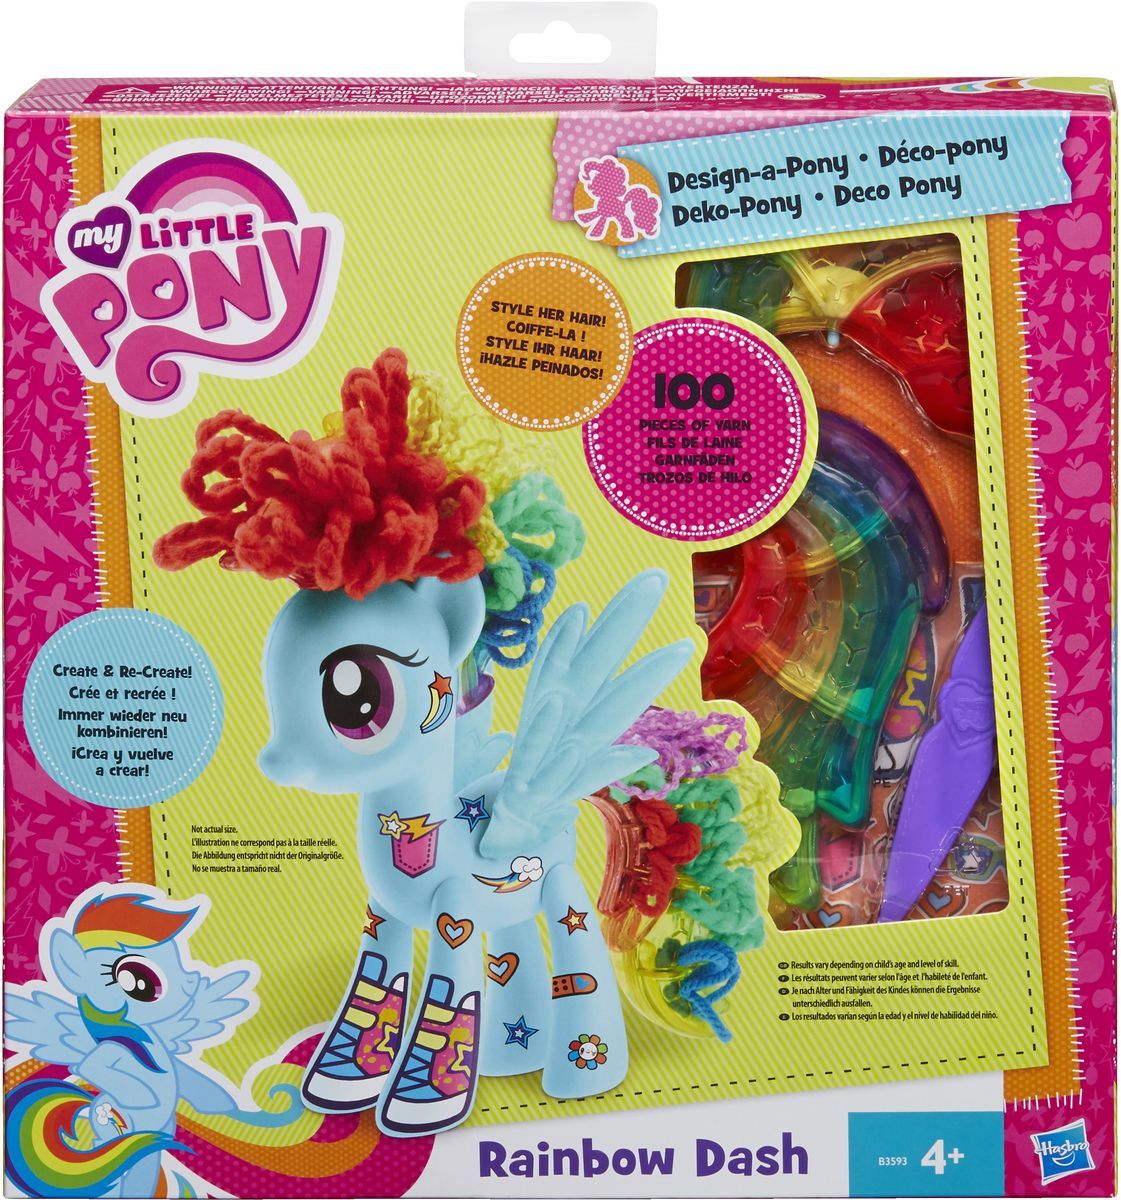 My Little Pony   Design-a-Pony Rainbow Dash